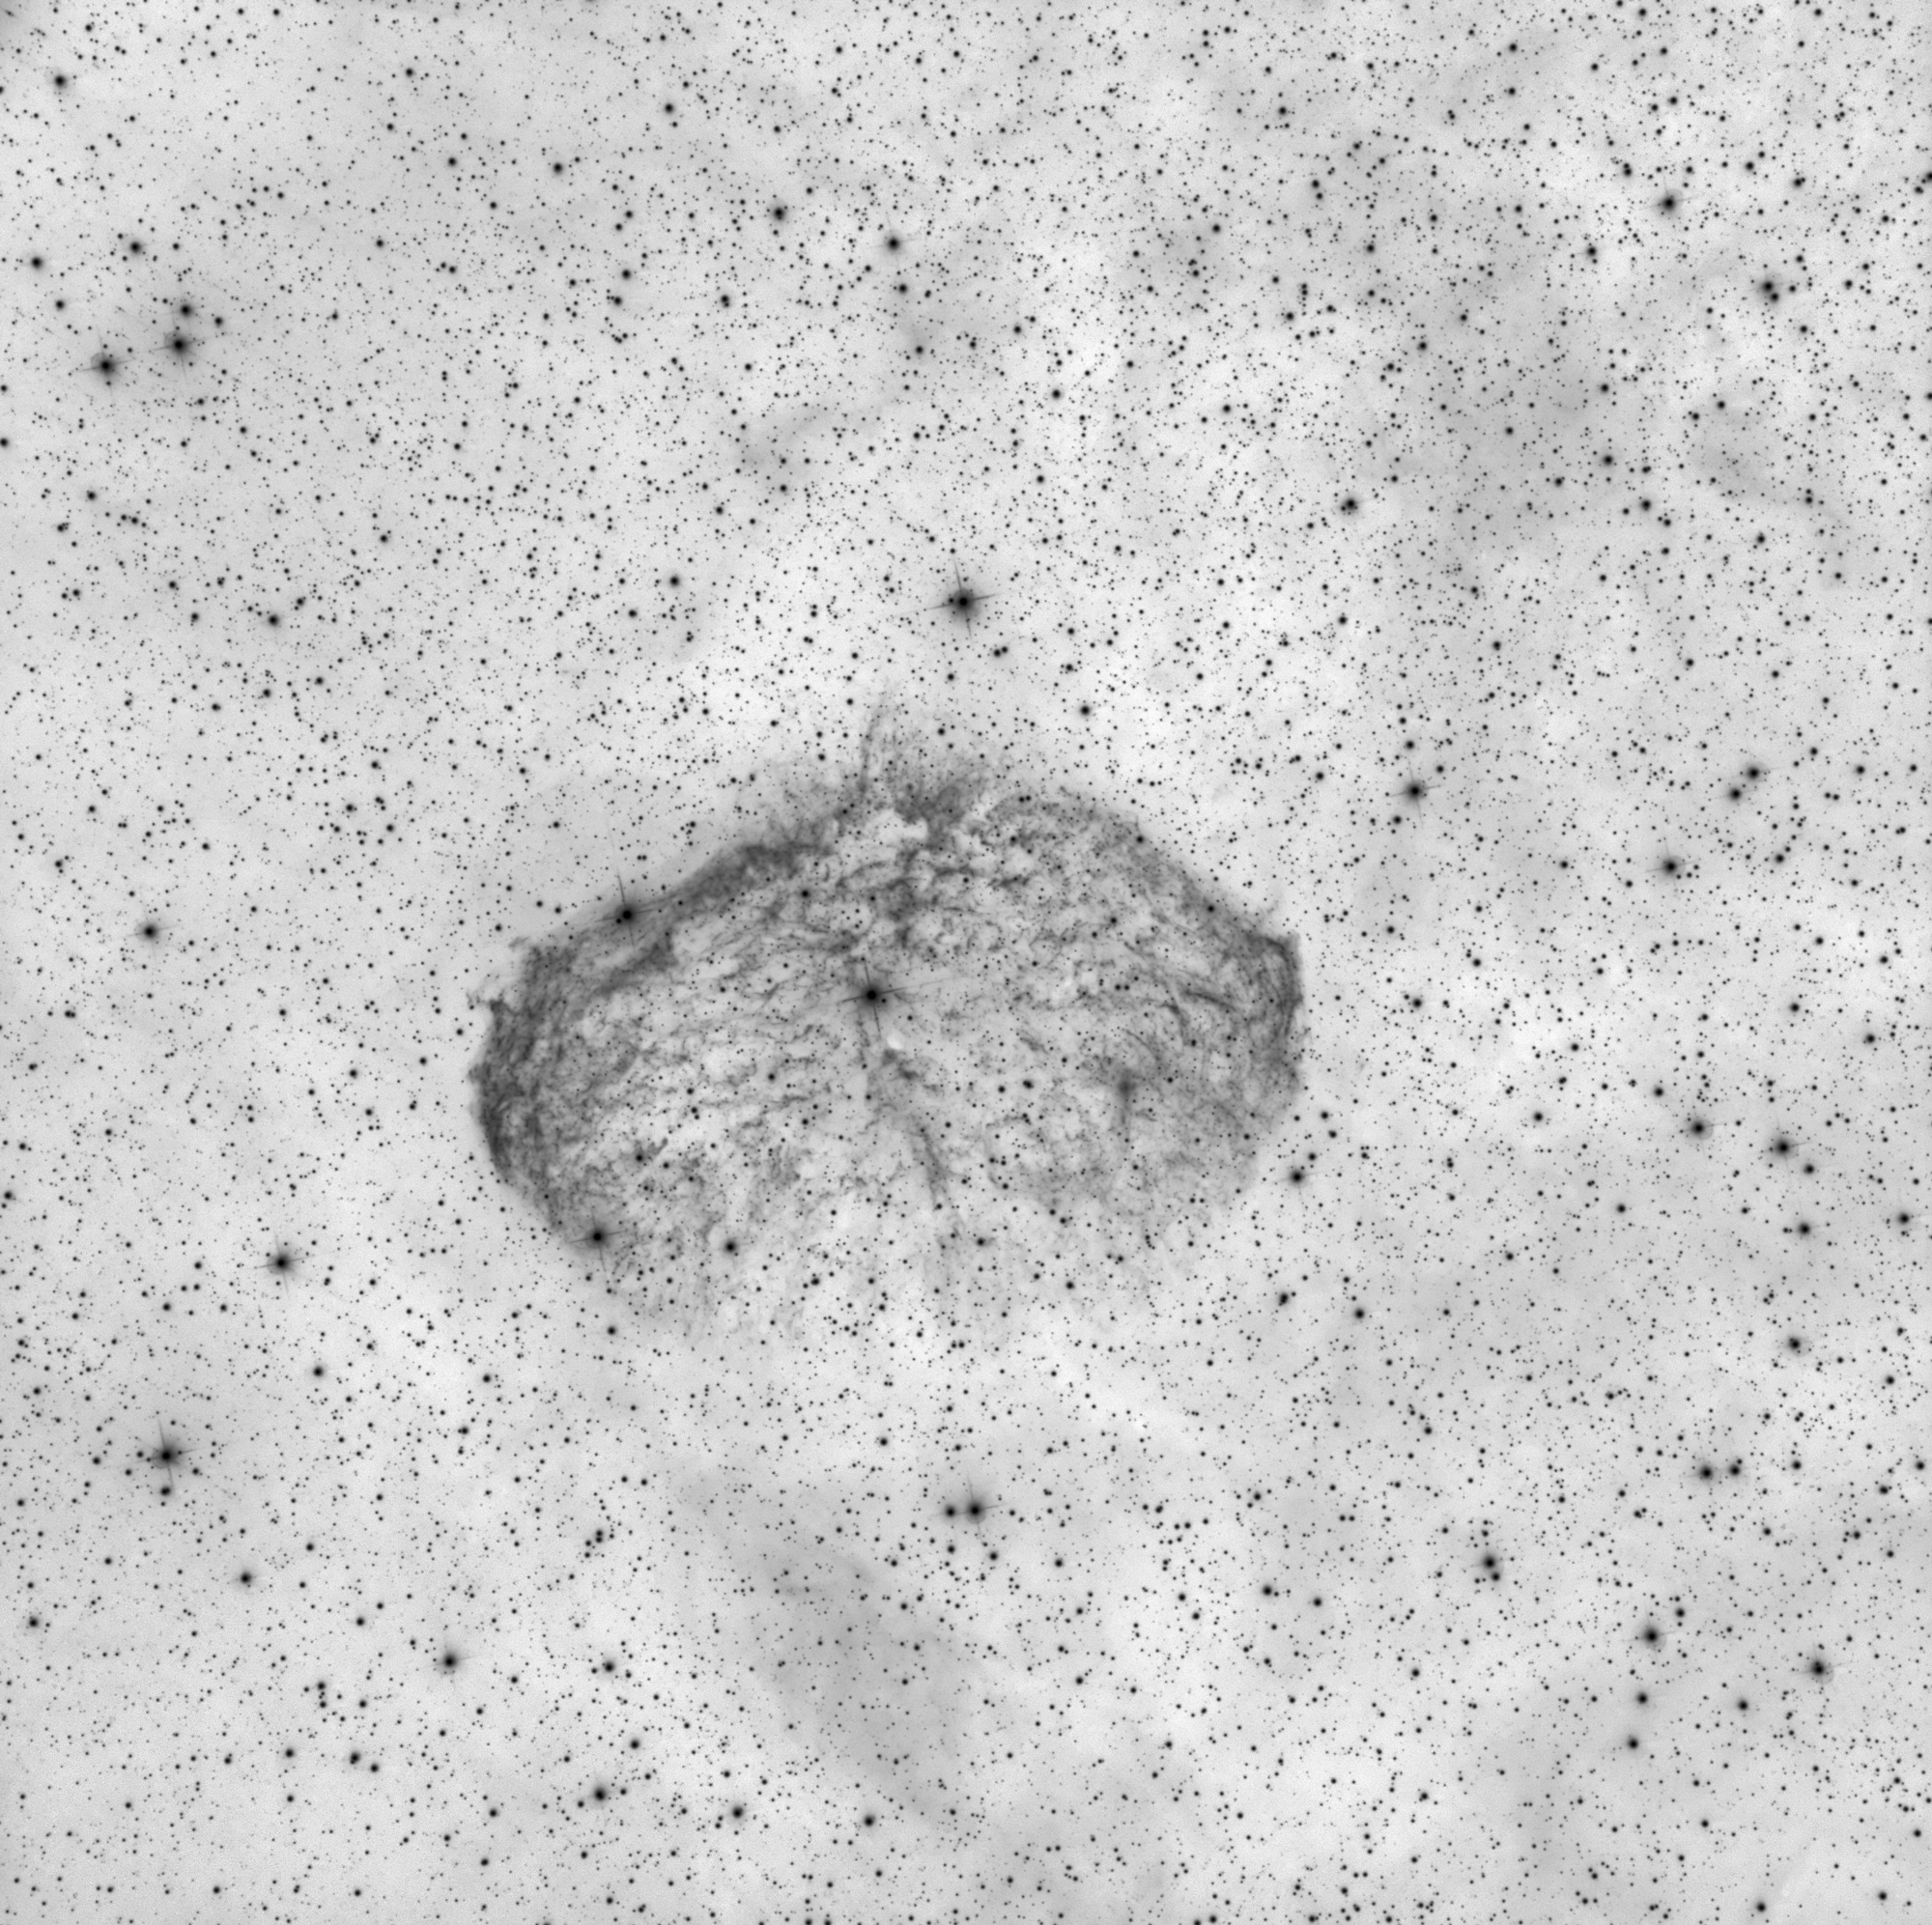 NGC6888 Ha Inverted